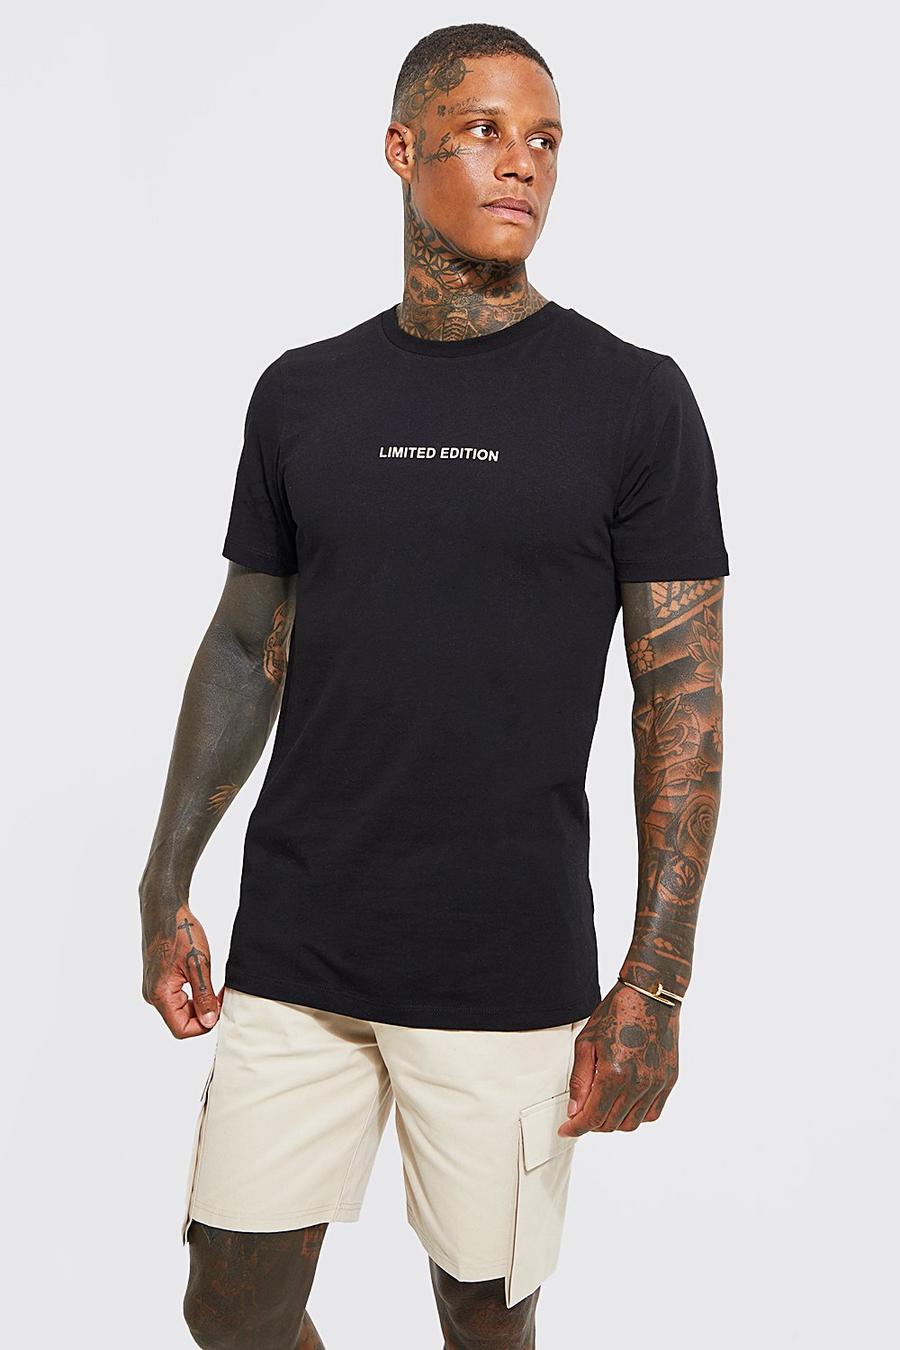 Limited Edition Rundhals T-Shirt, Black